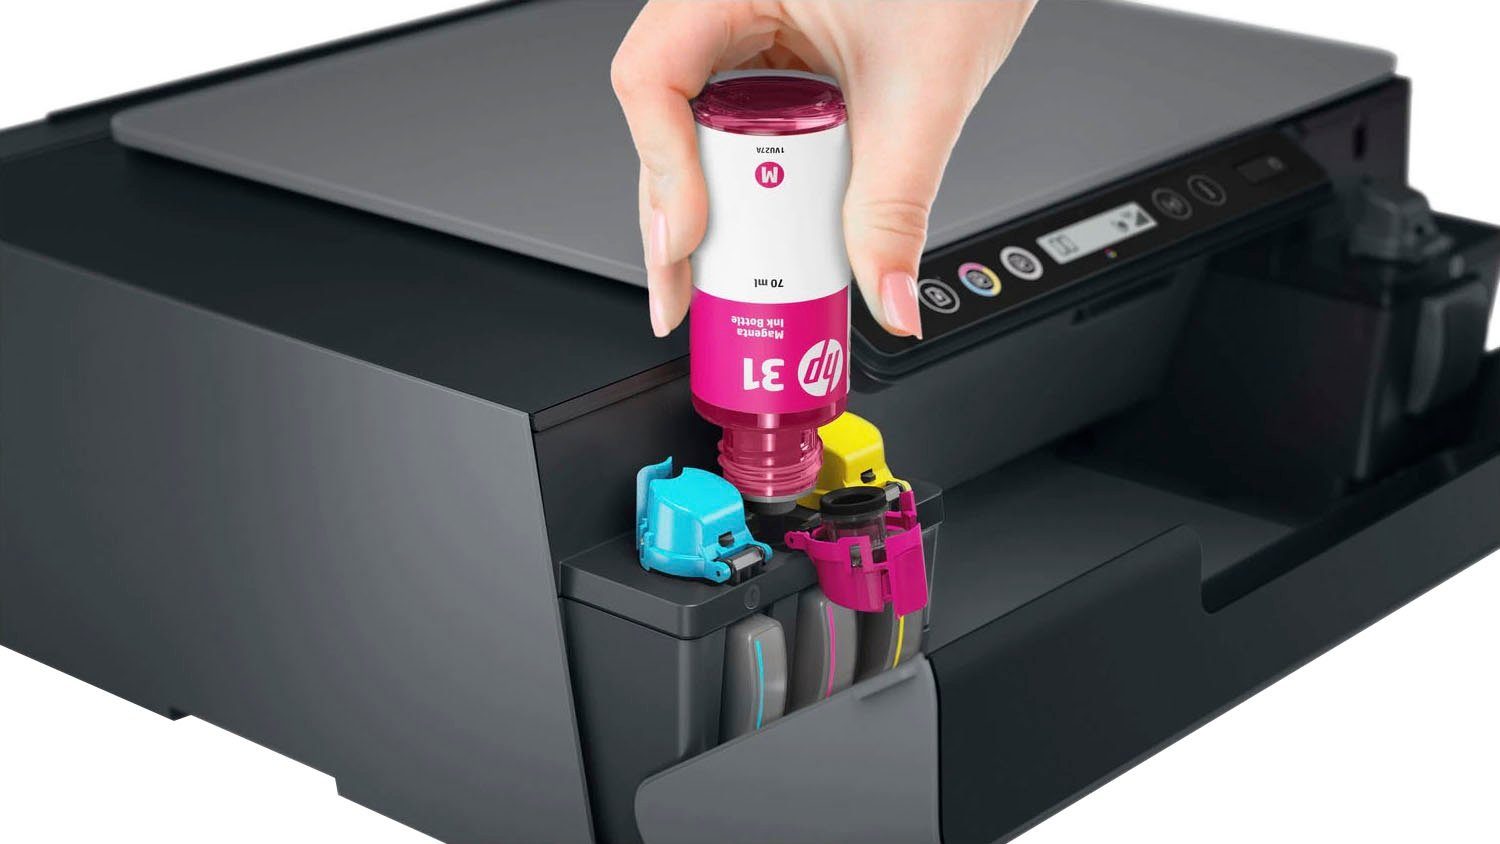 HP Smart Tank Plus Direct, HP+ 555 Instant kompatibel) Ink Multifunktionsdrucker, Wi-Fi (Bluetooth